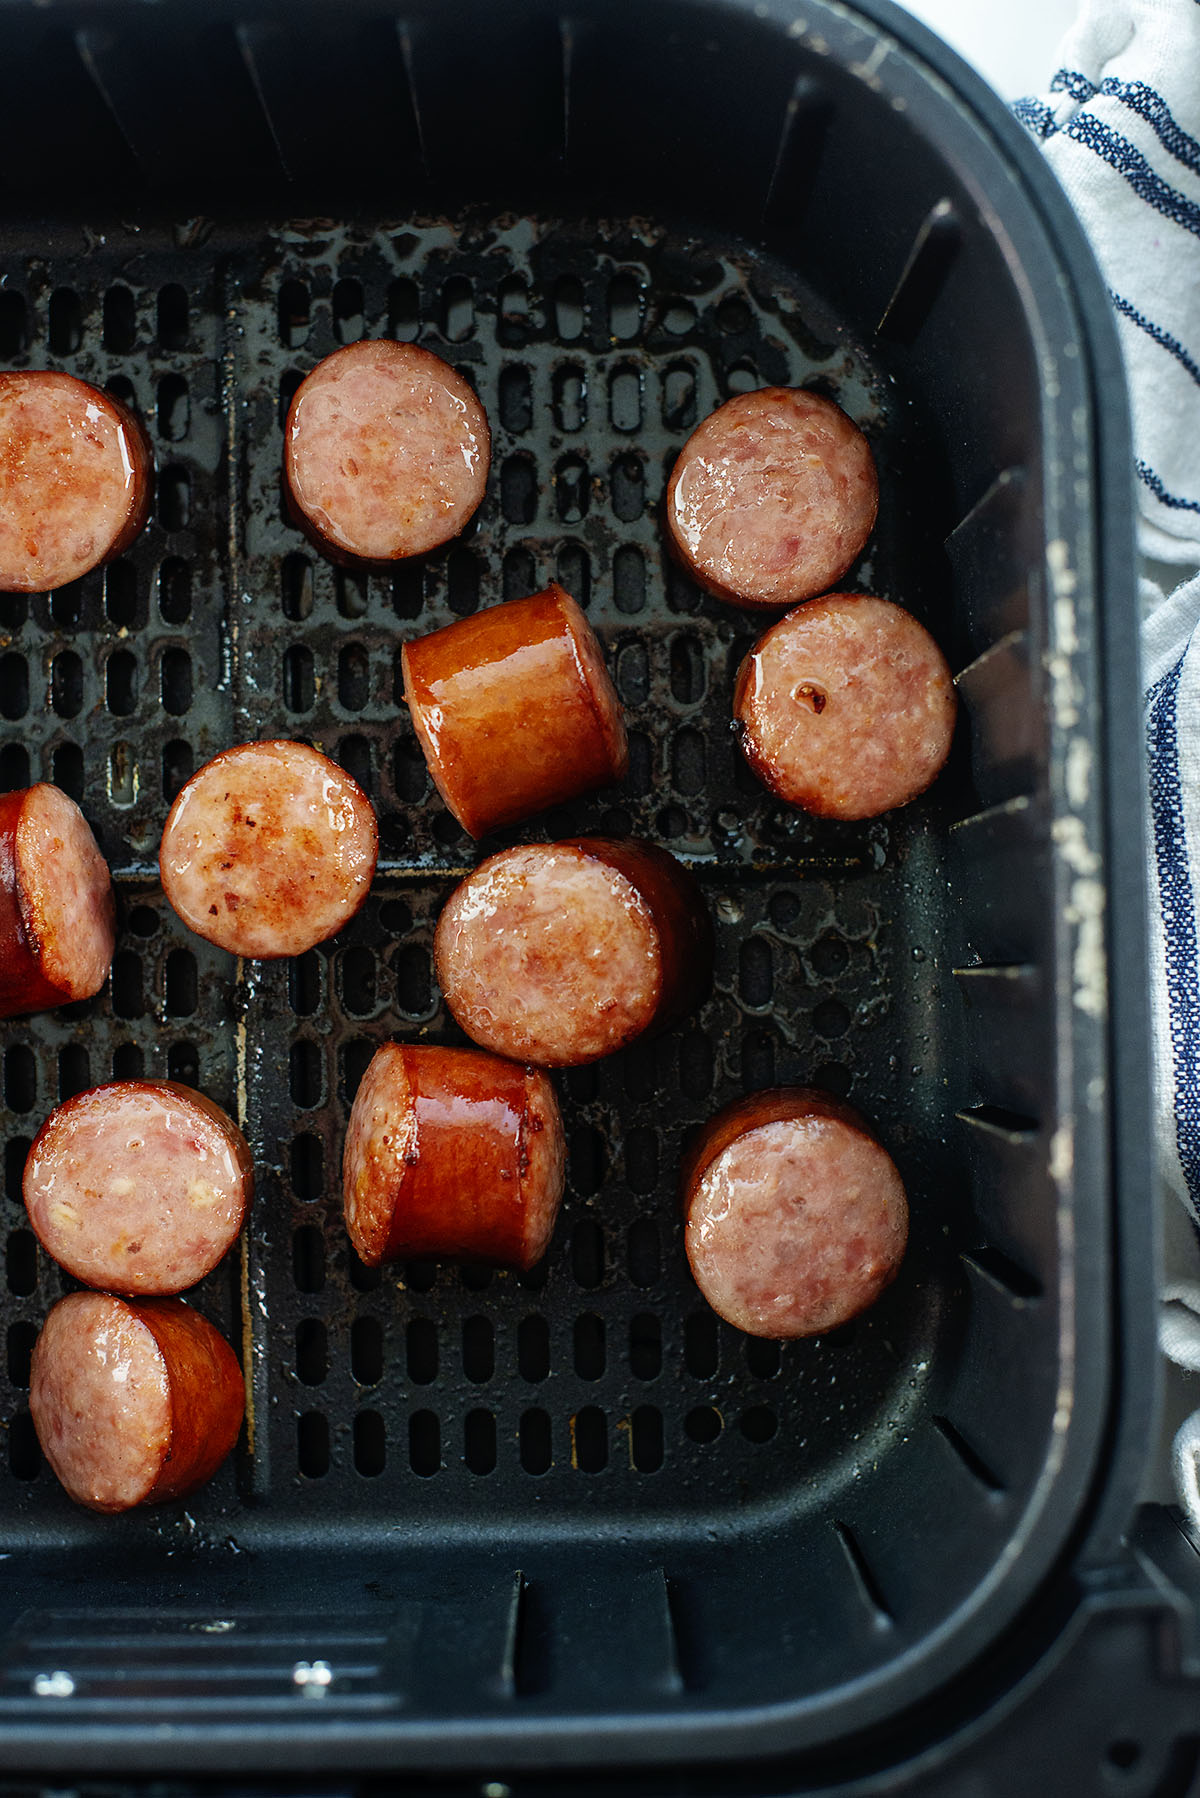 Smoked sausage chunks in an air fryer basket.